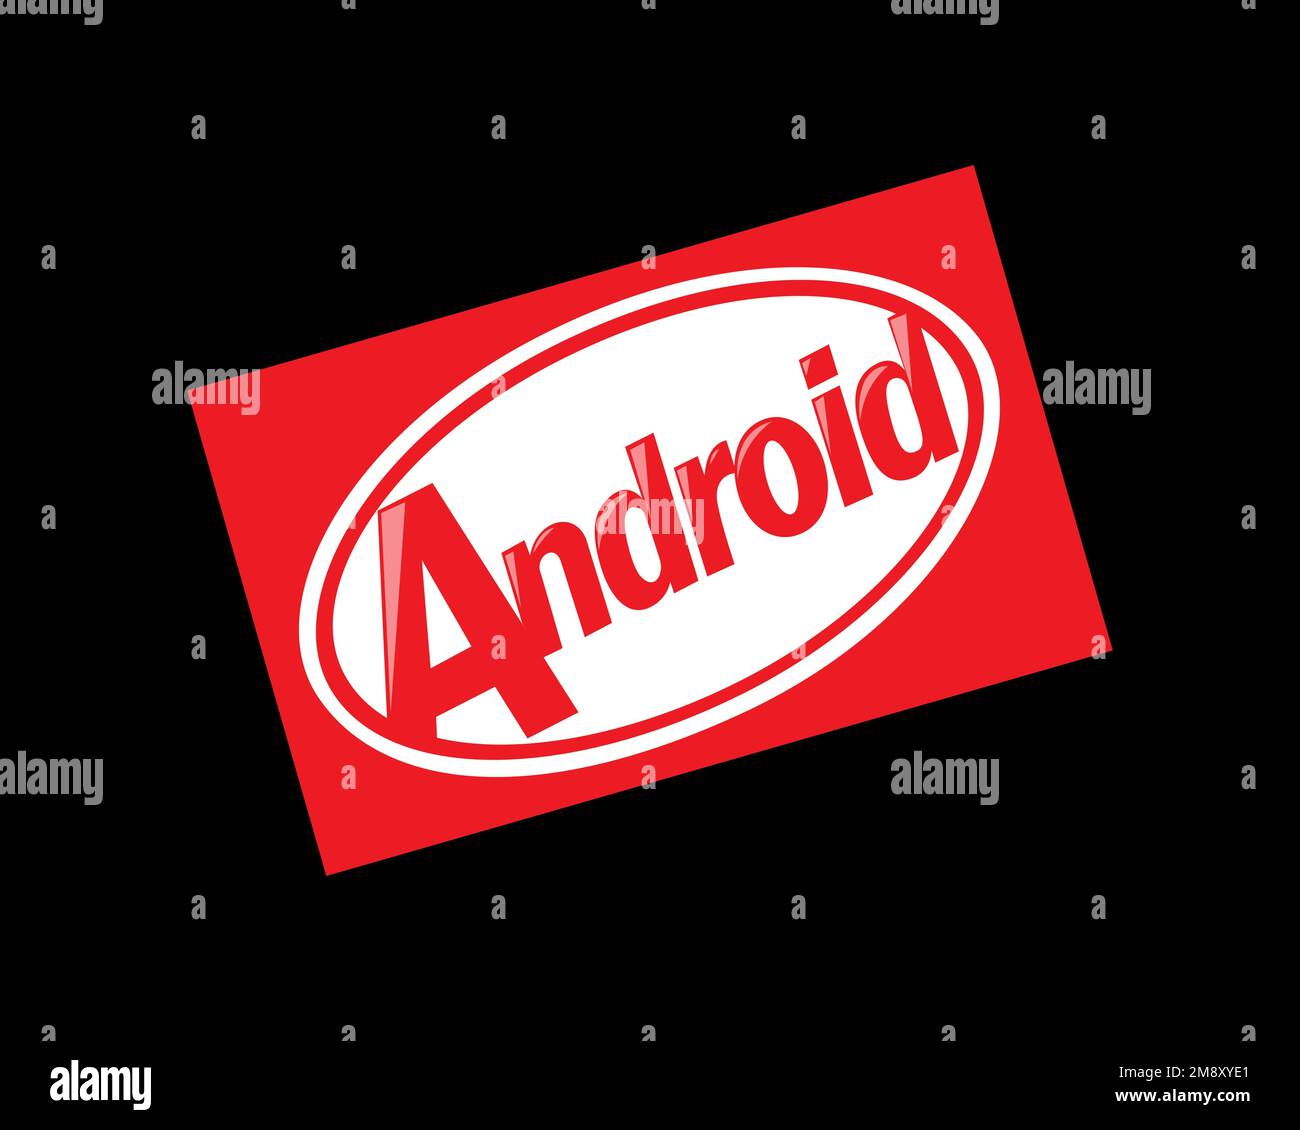 kitkat android logo